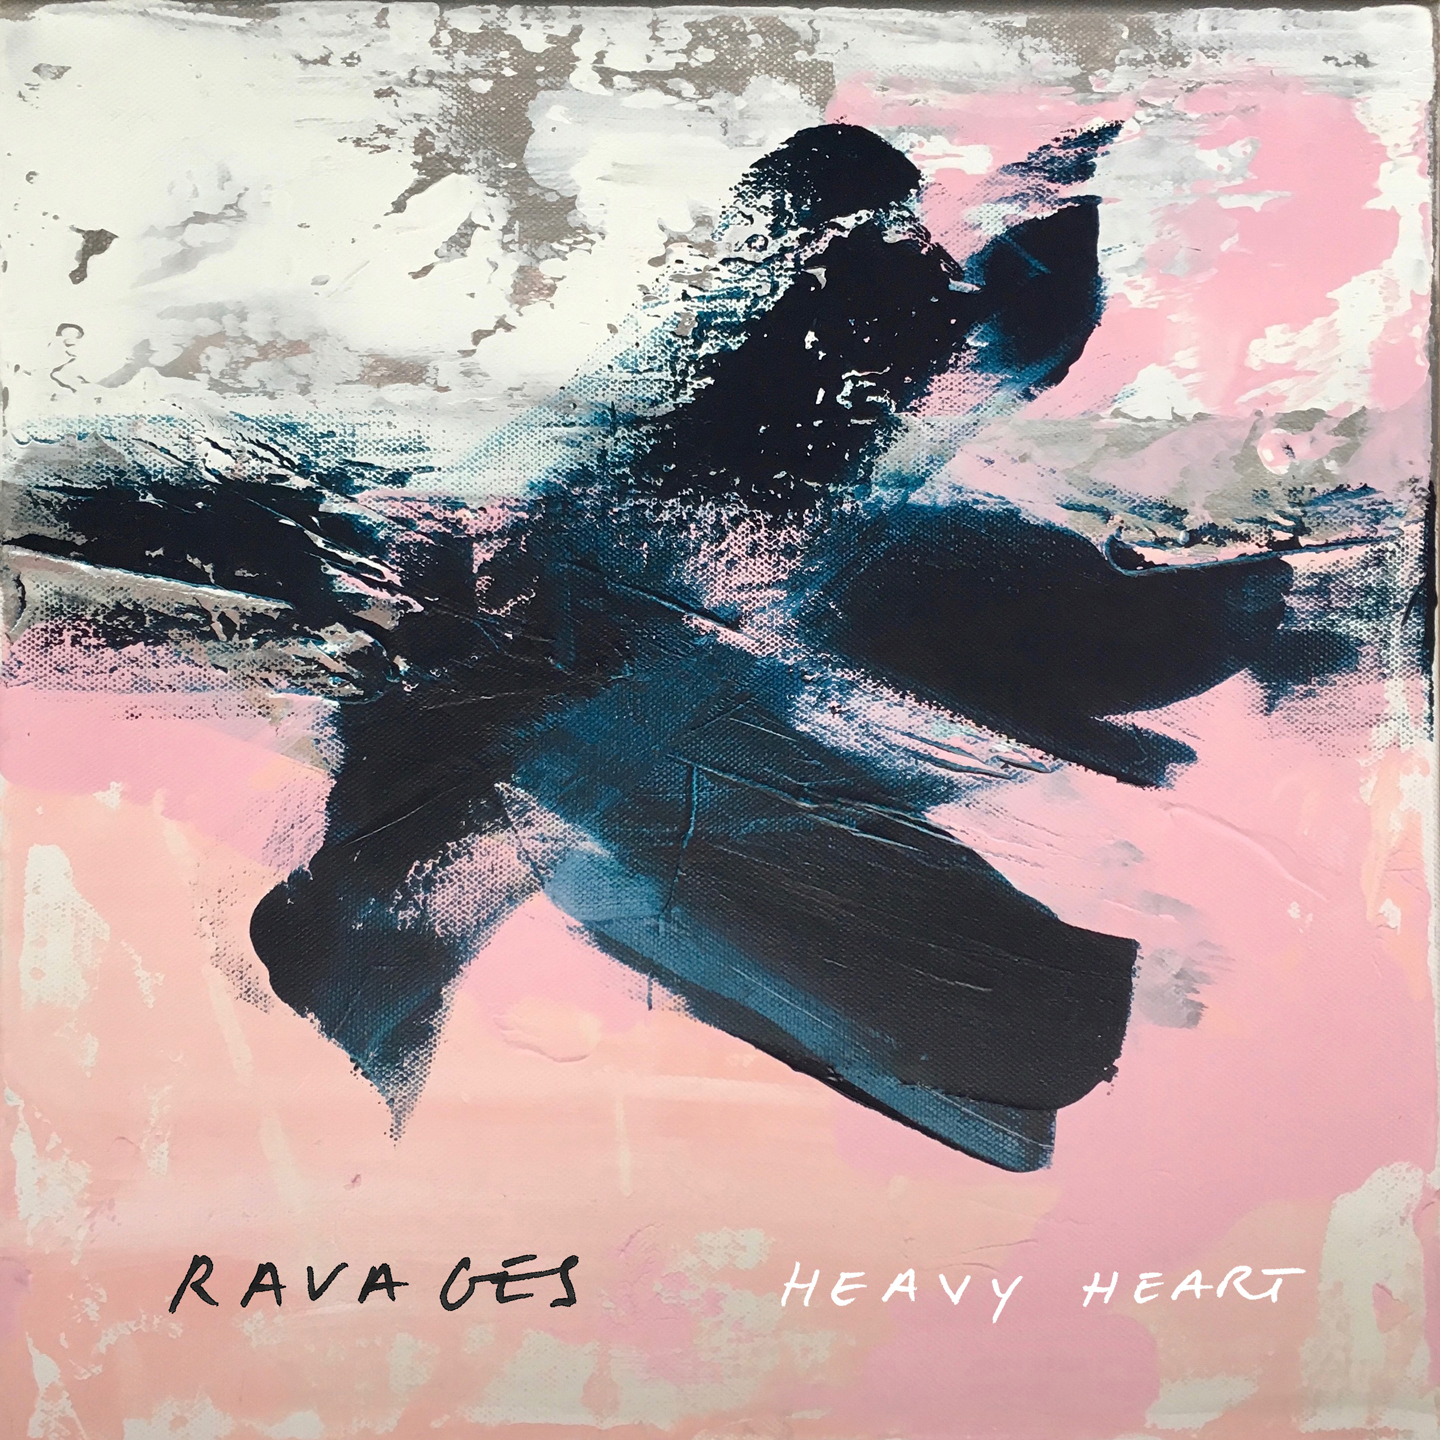 Ravages - Heavy Heart